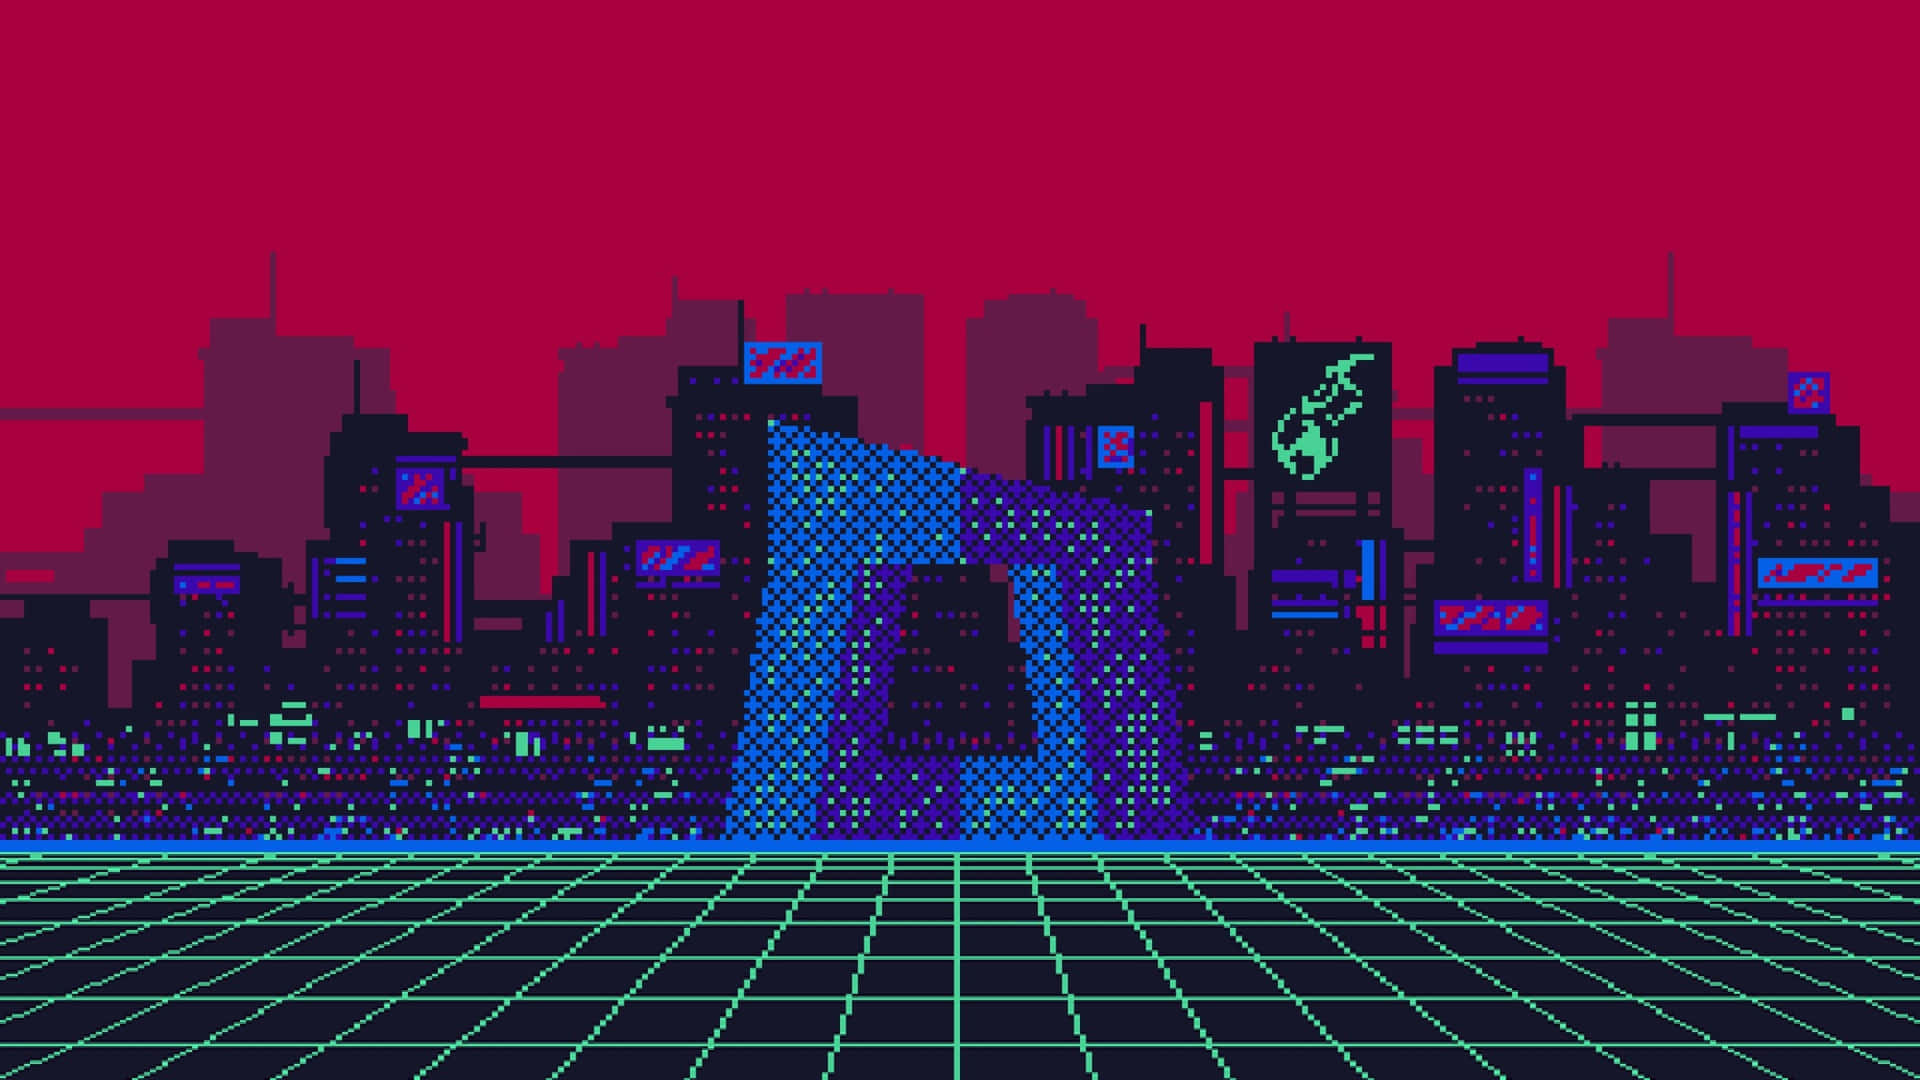 An Illustration Of A Striking 2048x1152 Pixel Design Background